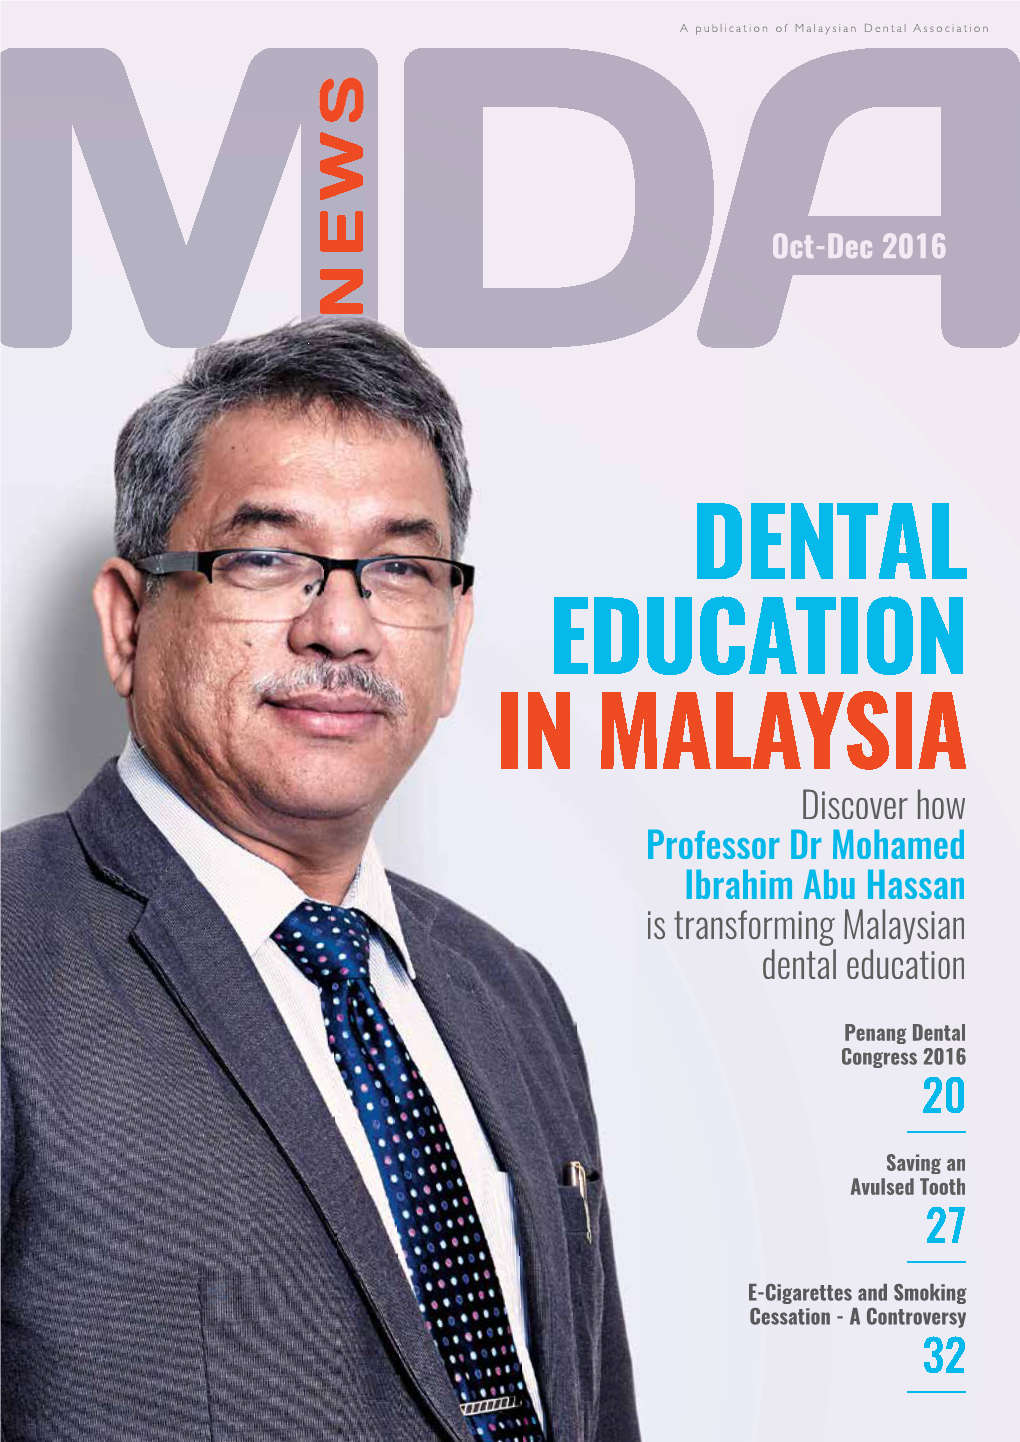 DENTAL EDUCATION in MALAYSIA Discoverdiscover How Professor Dr Mohamed Iibrahimbrahim Abu Hassan Isis Transforming Malaysian Dental Education